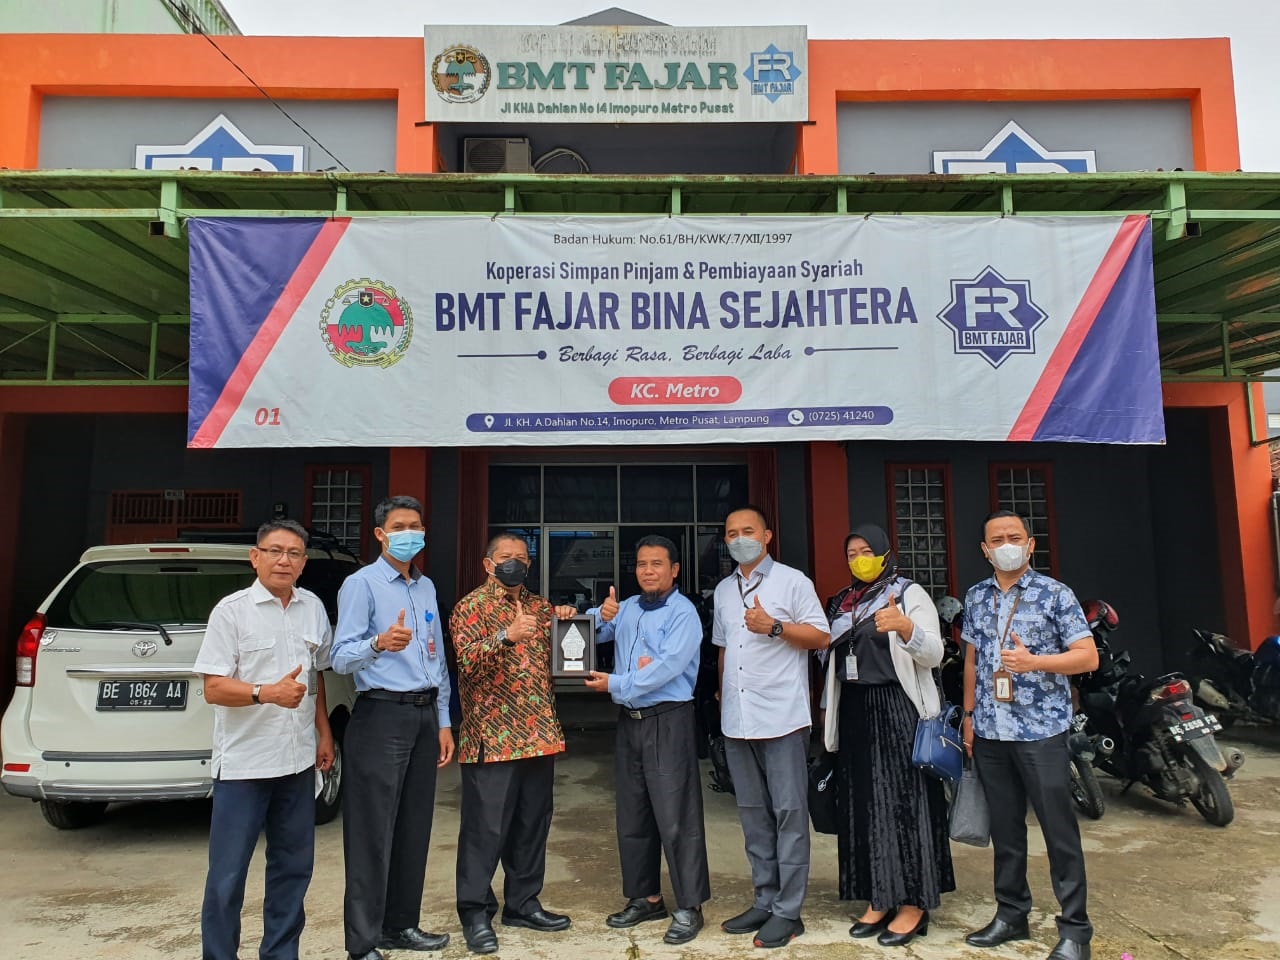 Kunjungan Perluasan Kerja Sama di Lampung, Askrindo Syariah Memperkuat Hubungan dengan Mitranya